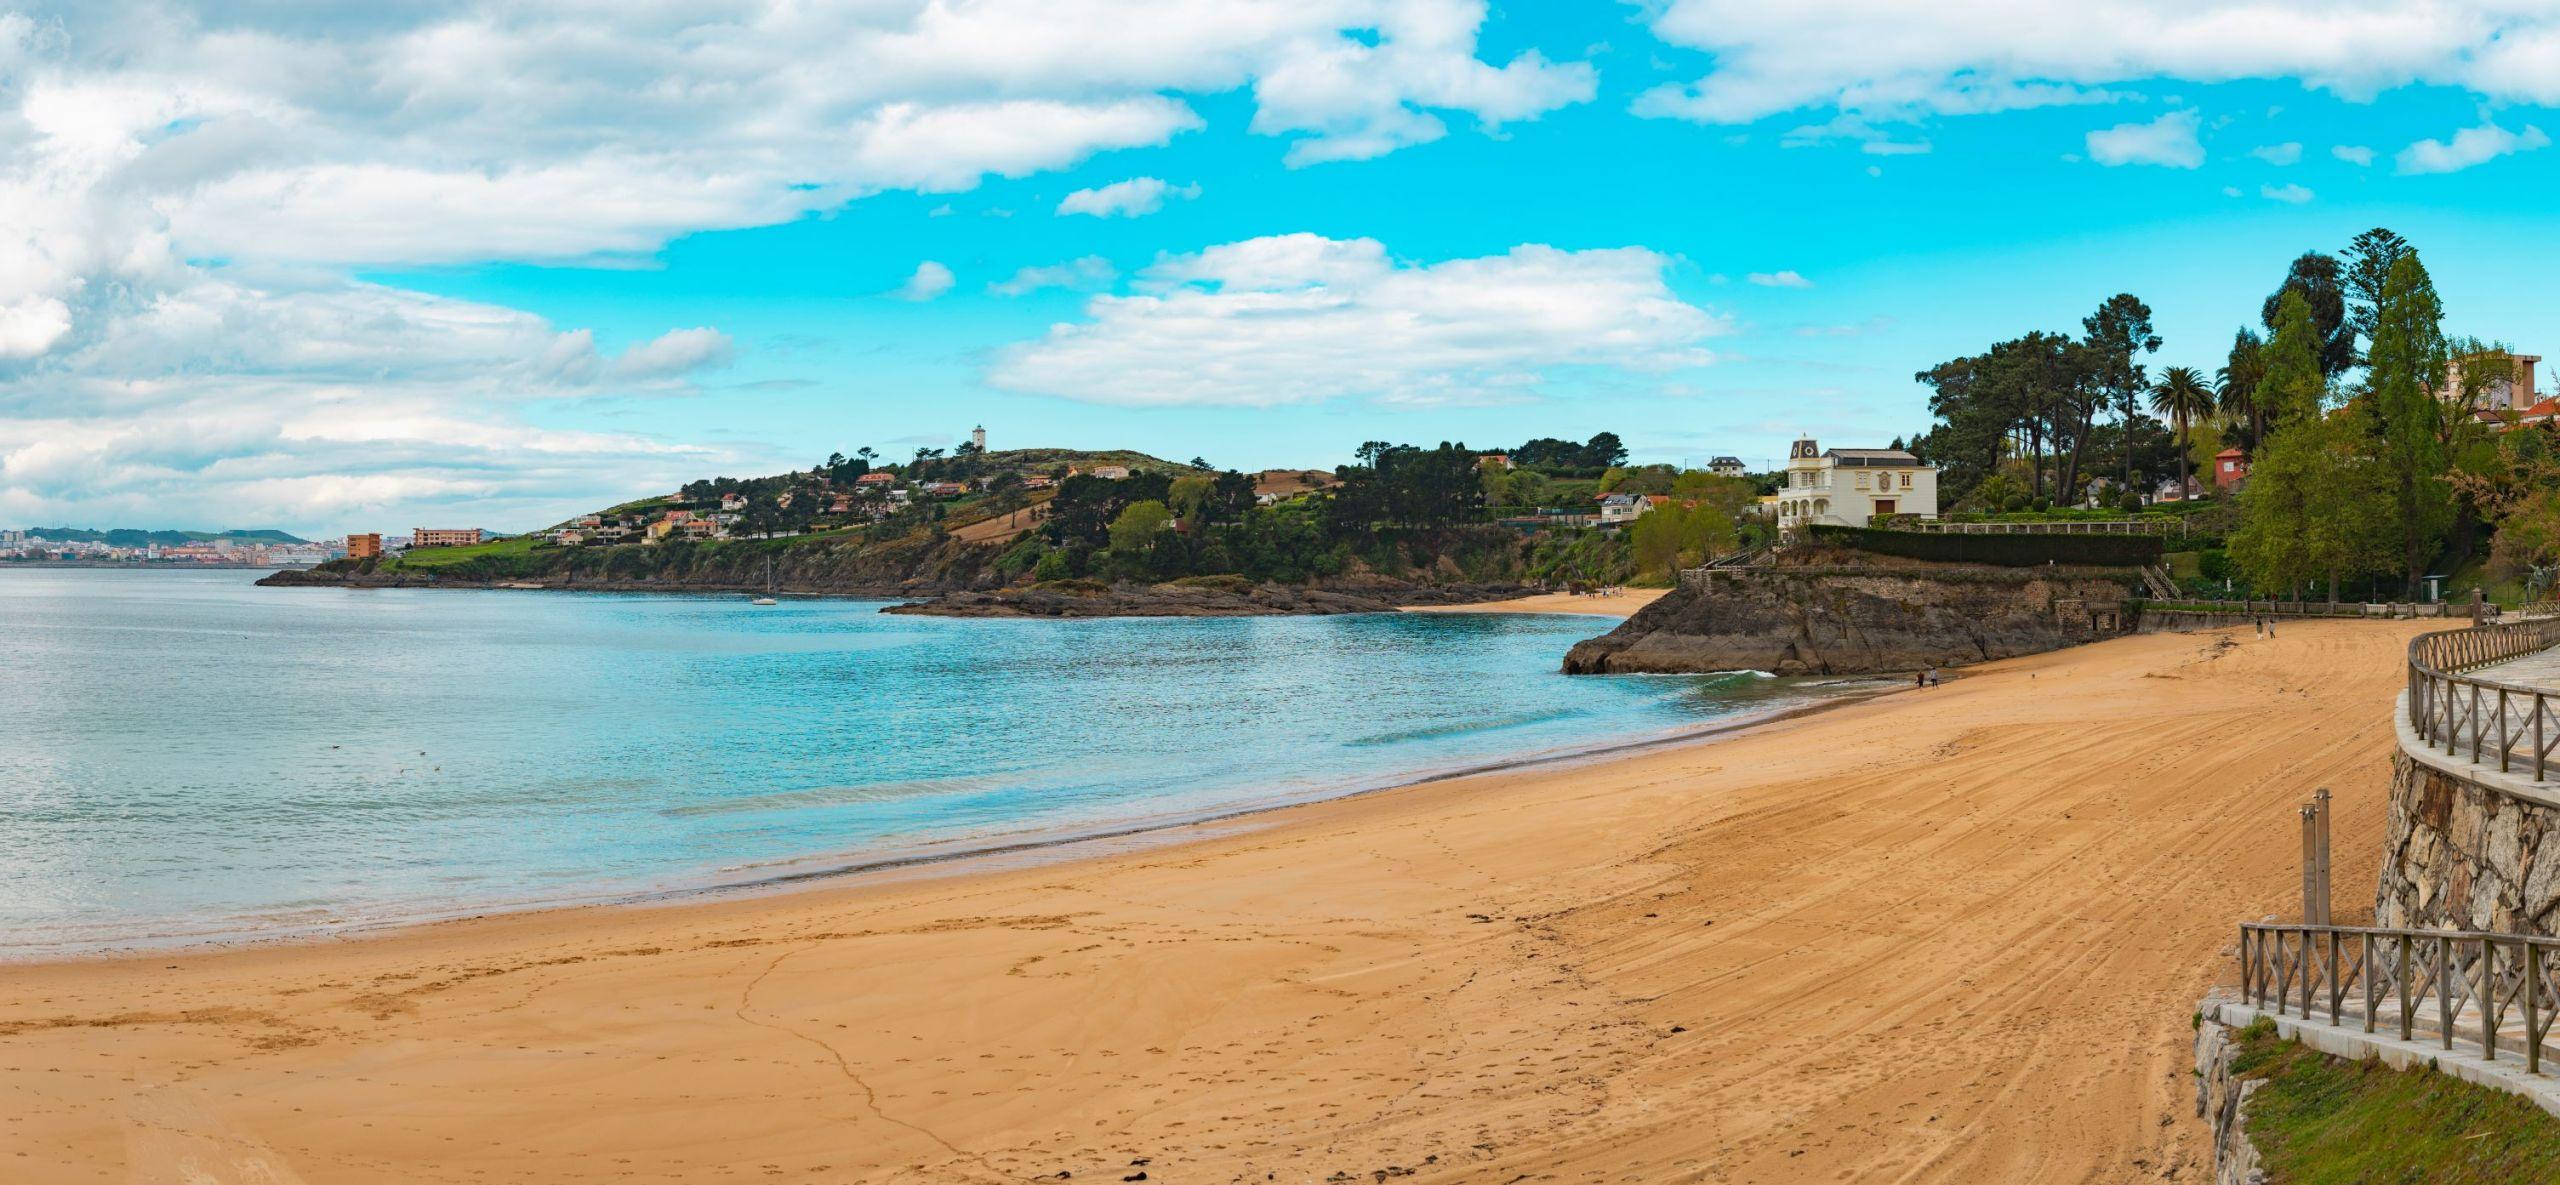 Playa de Mera (Fuente: Shutterstock)